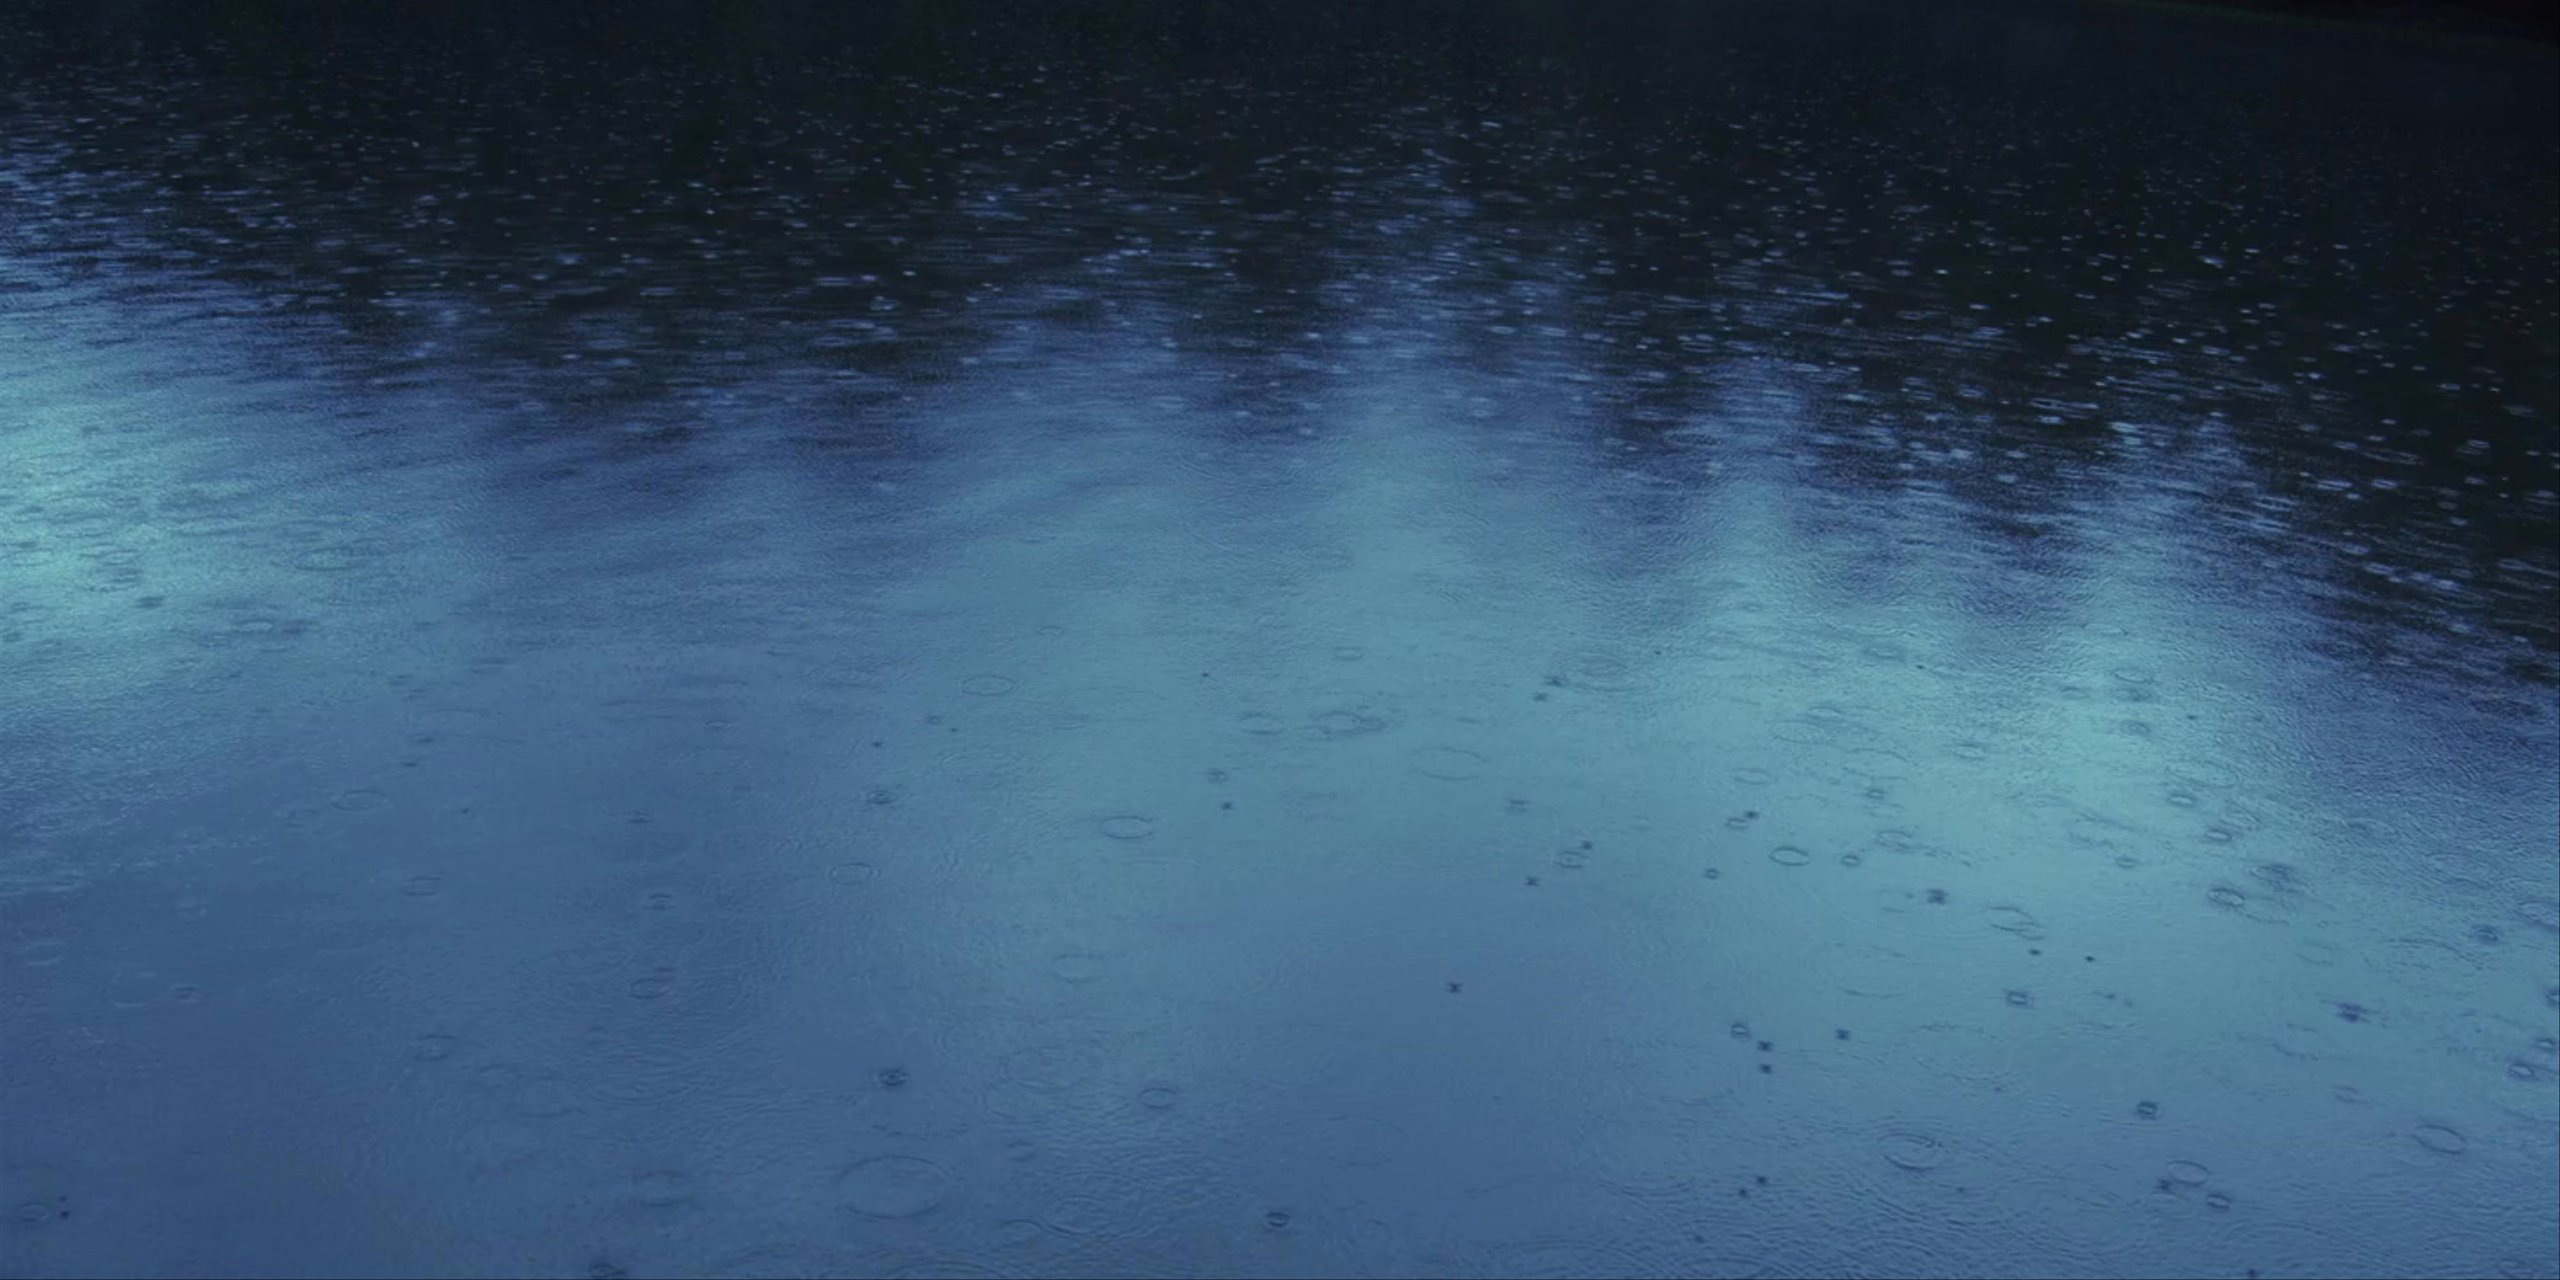 Rain falling on blue lake